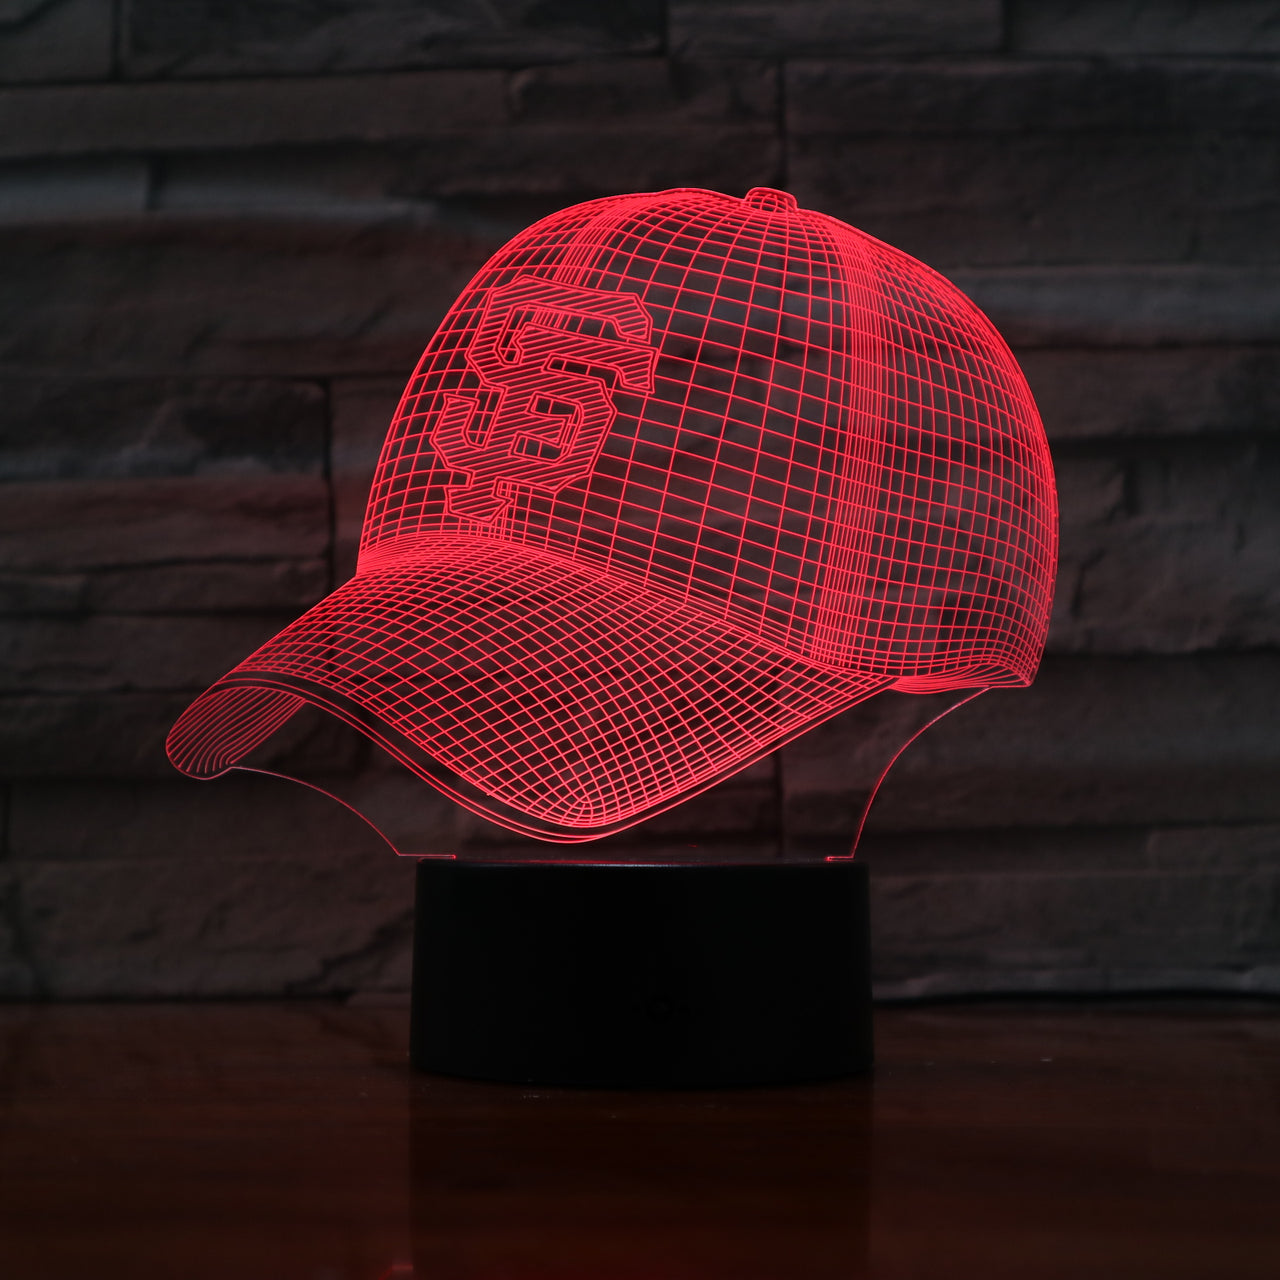 MLB PITTSBURGH PIRATES 3D LED LIGHT LAMP